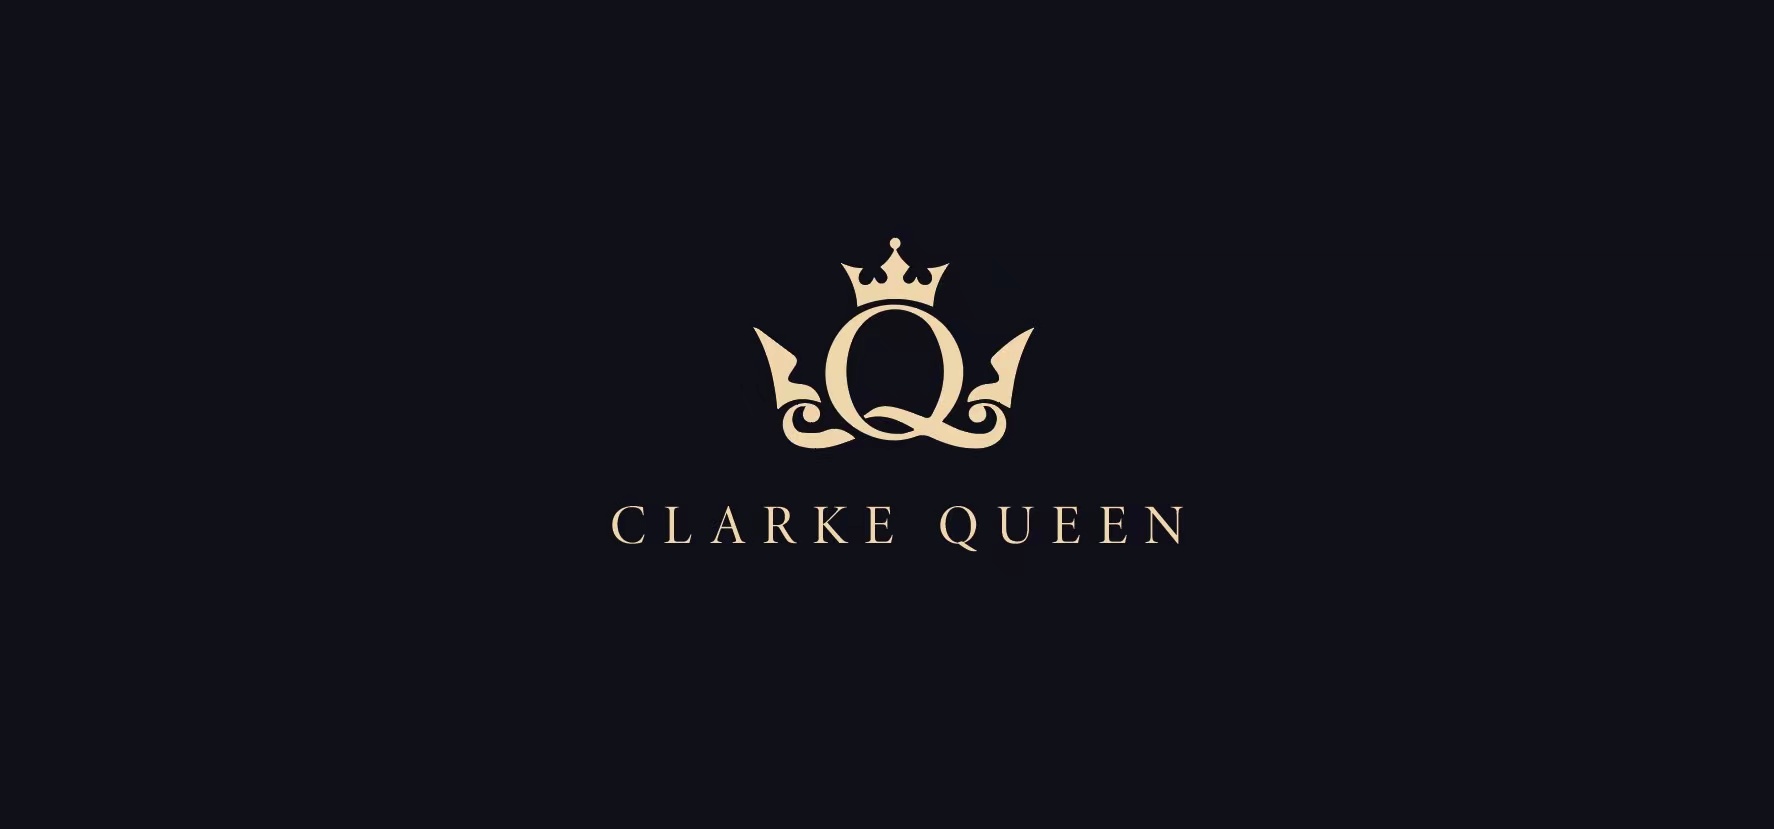 CLARKE QUEEN（克拉女王）法国鹅绒服轻奢品牌的传奇篇章